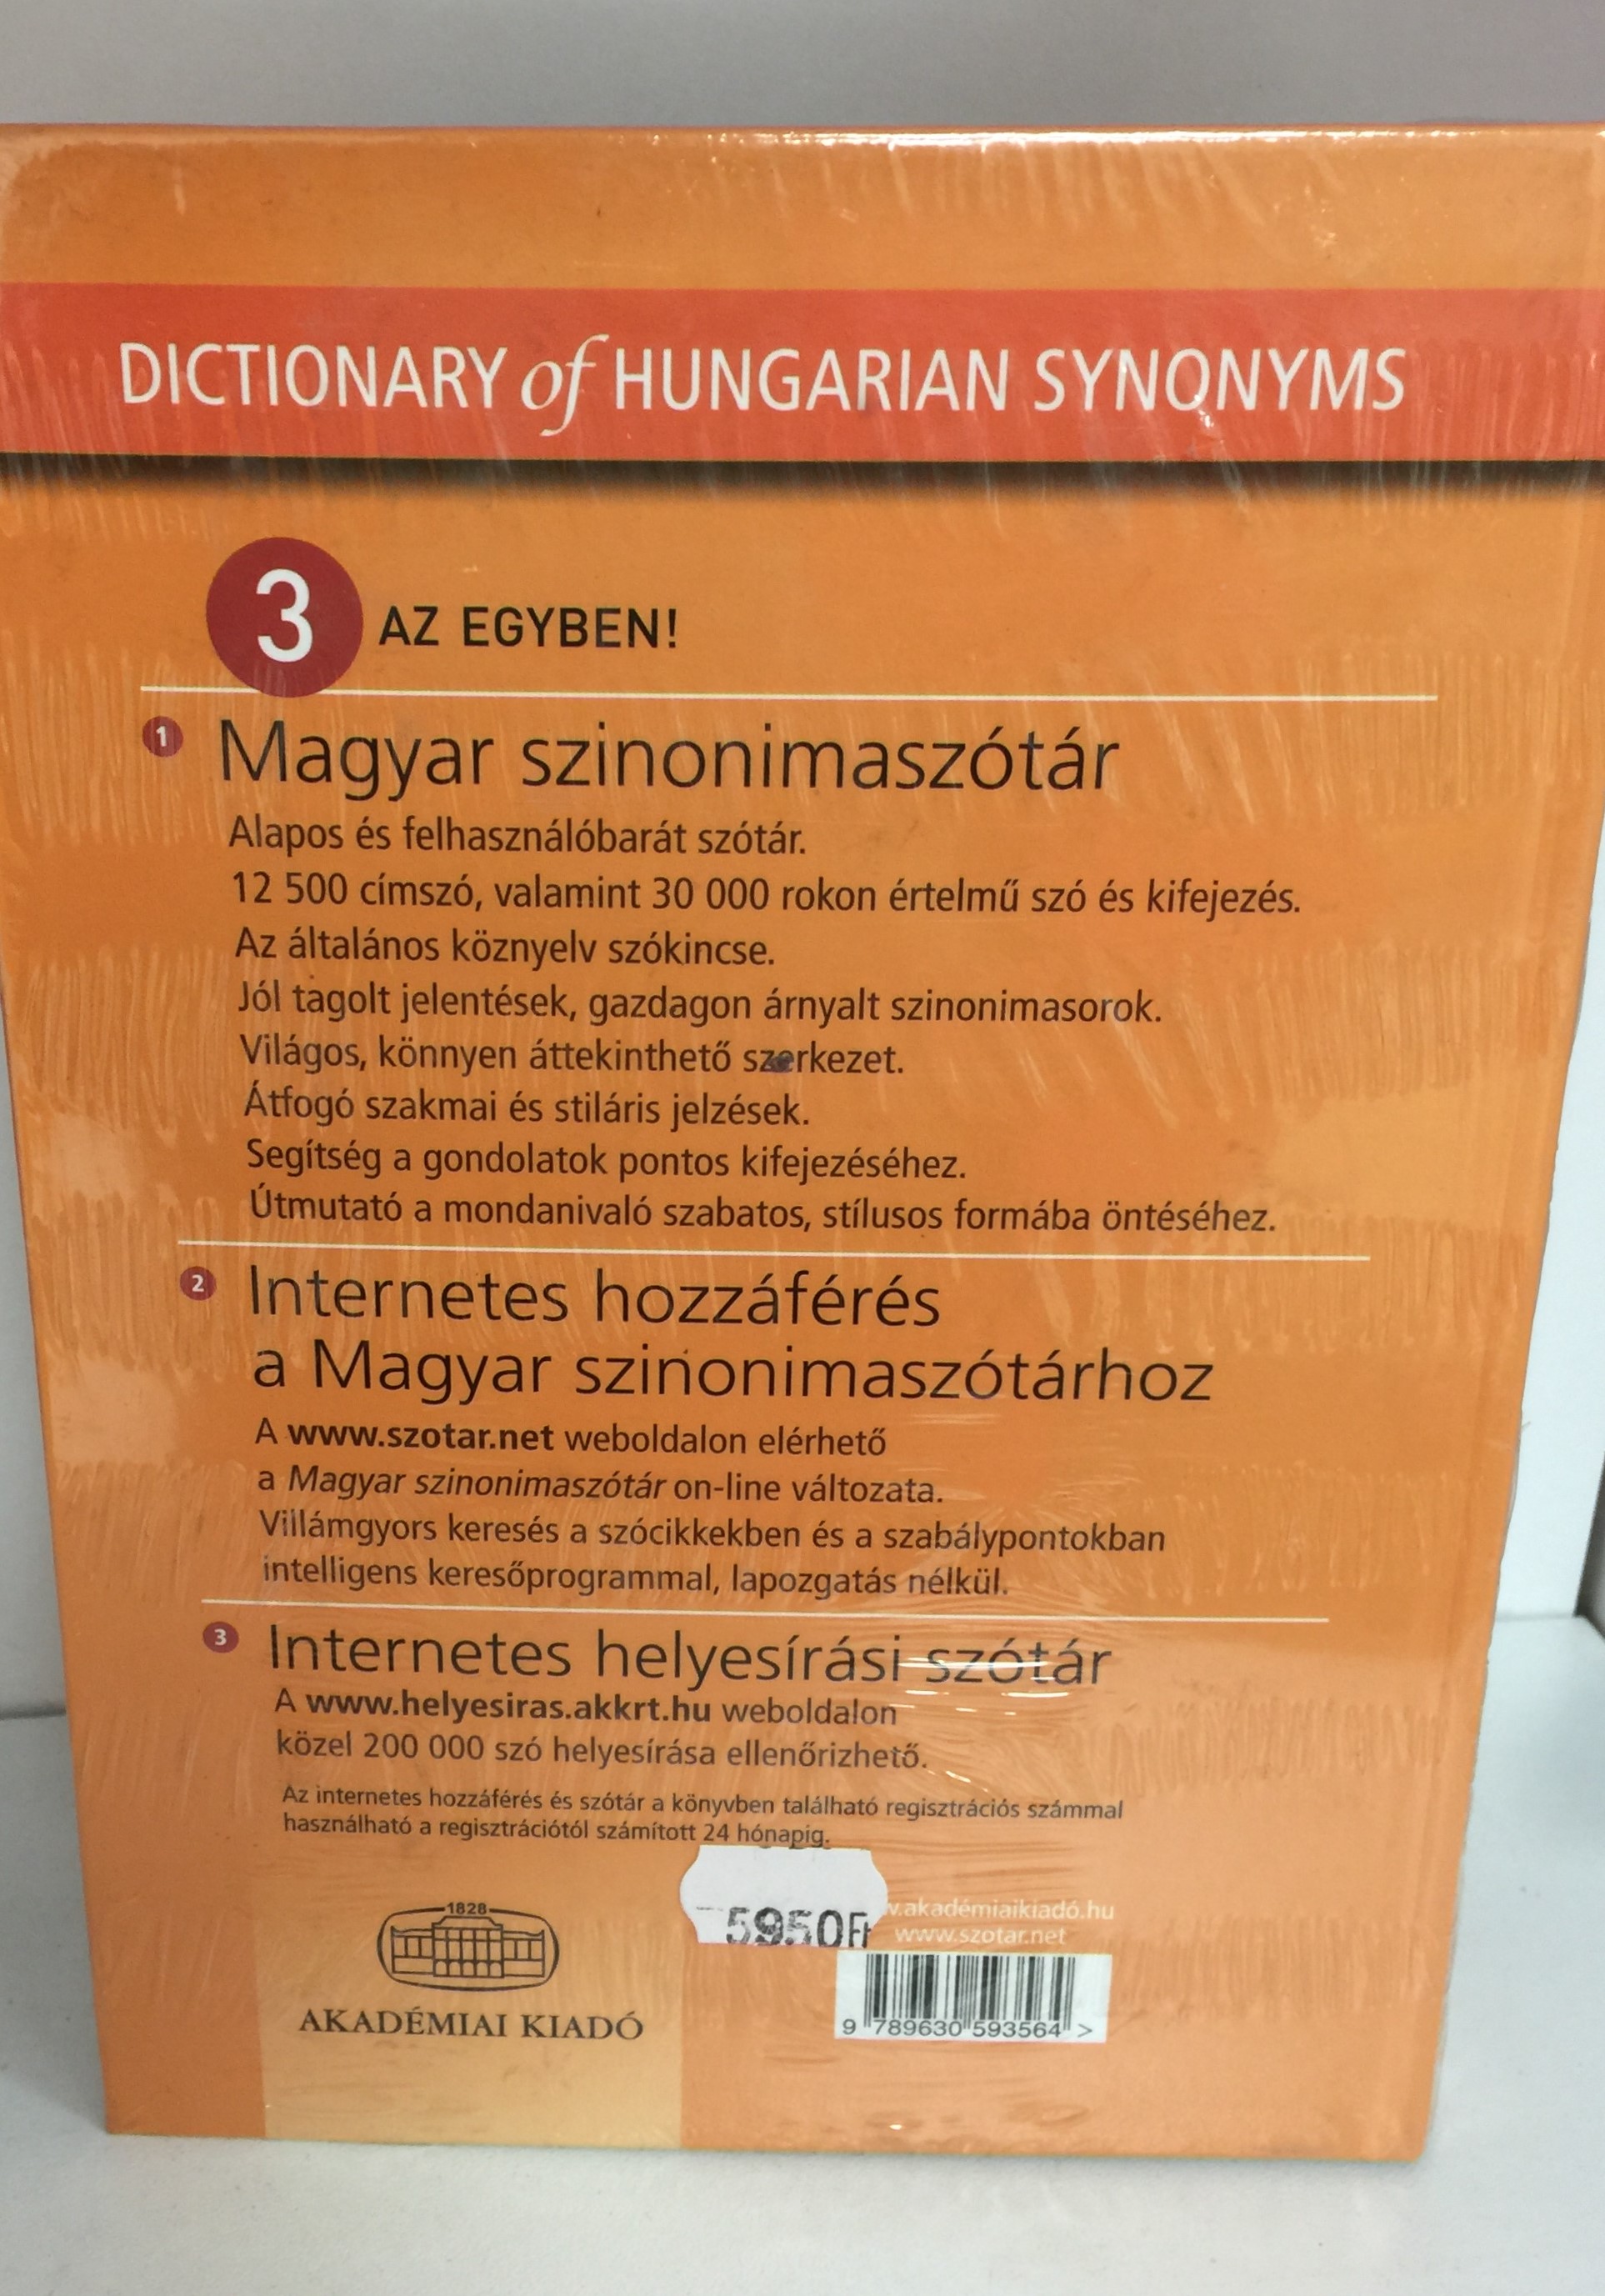 Magyar szinonima-szótár - Dictionary of Hungarian Synonyms  1